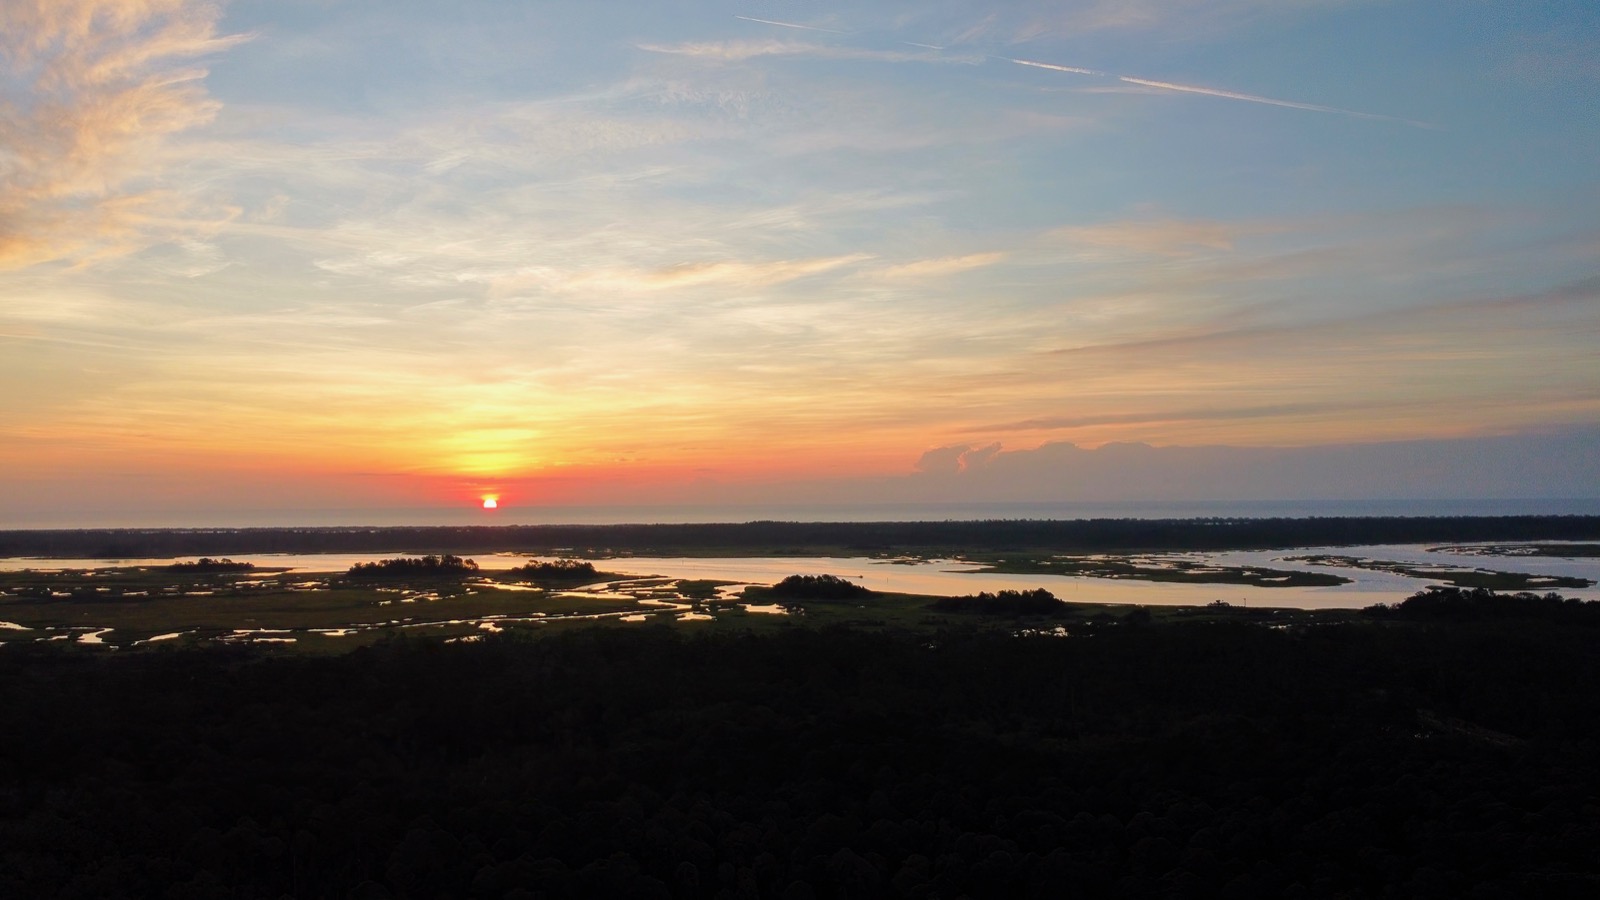 Sunrise looking over the Tolomato River toward the Atlantic Ocean from a DJI mini 2 drone. Lower limb of the sun touching the horizon